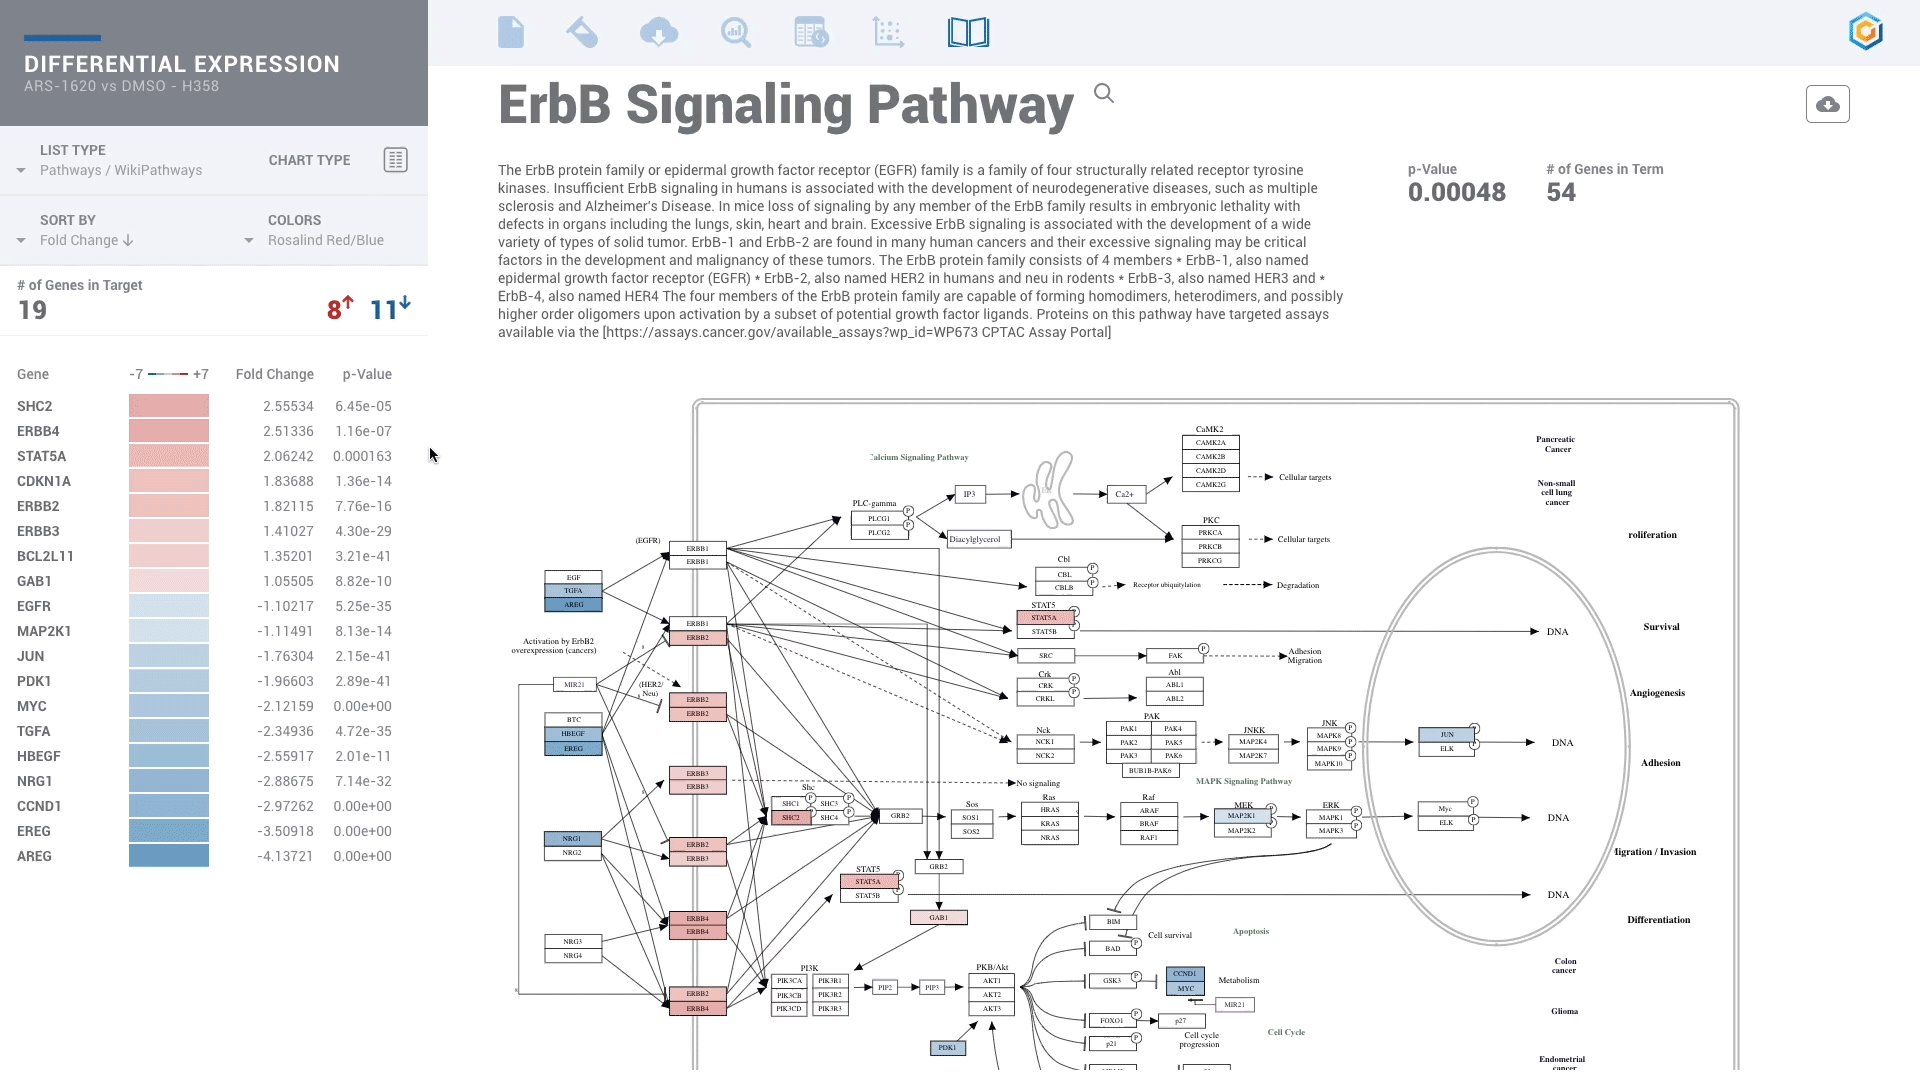 Exploring Expression in ErbB Signaling Pathway